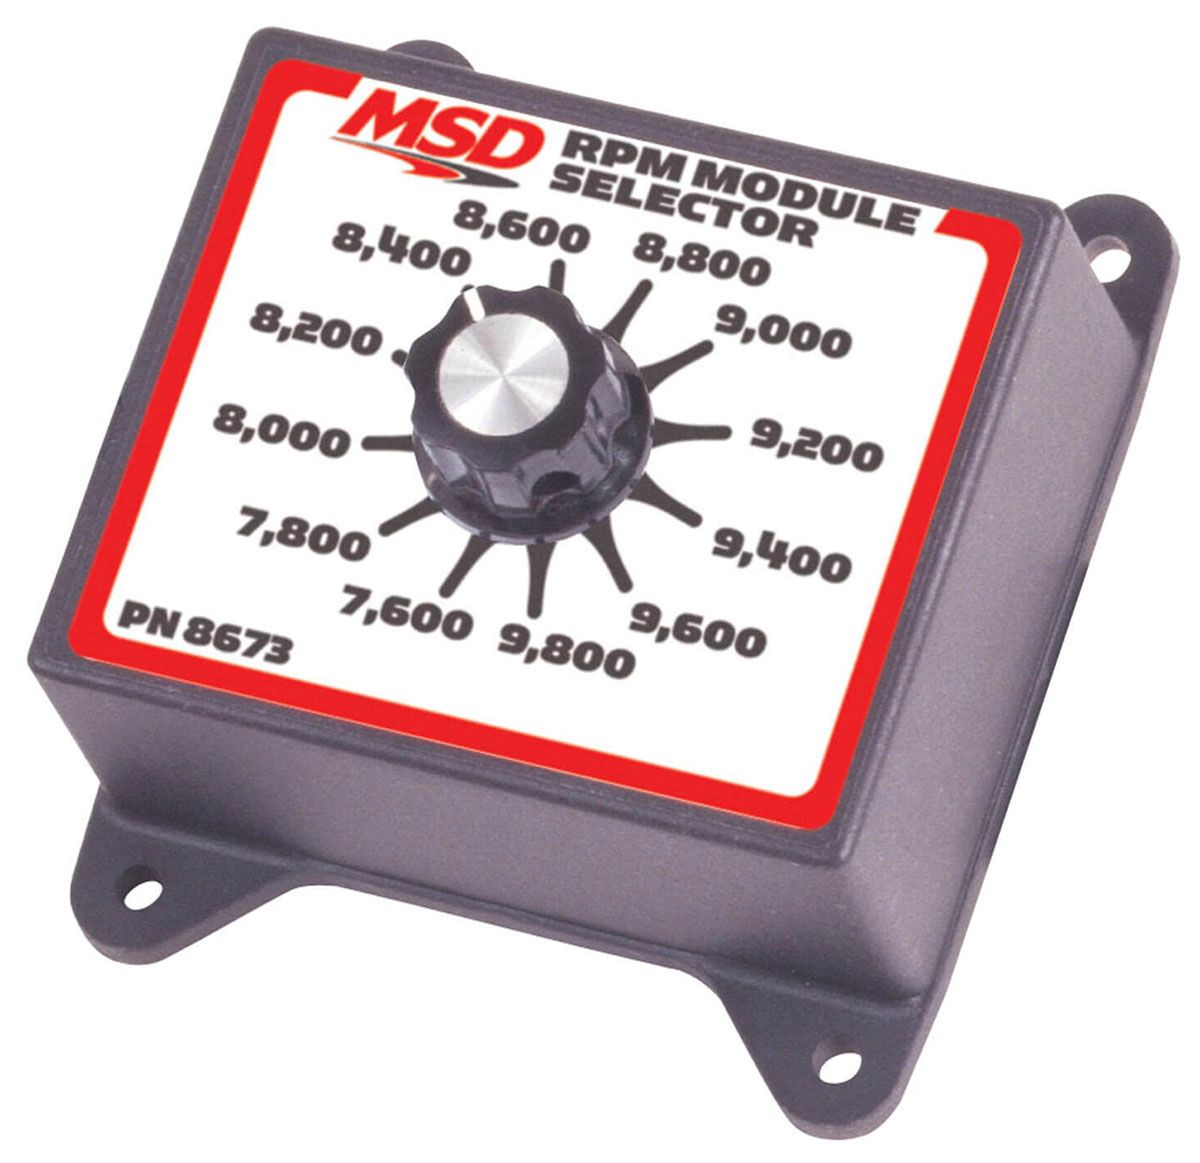 MSD8673 - RPM MODULE SELECTOR 7600-9800